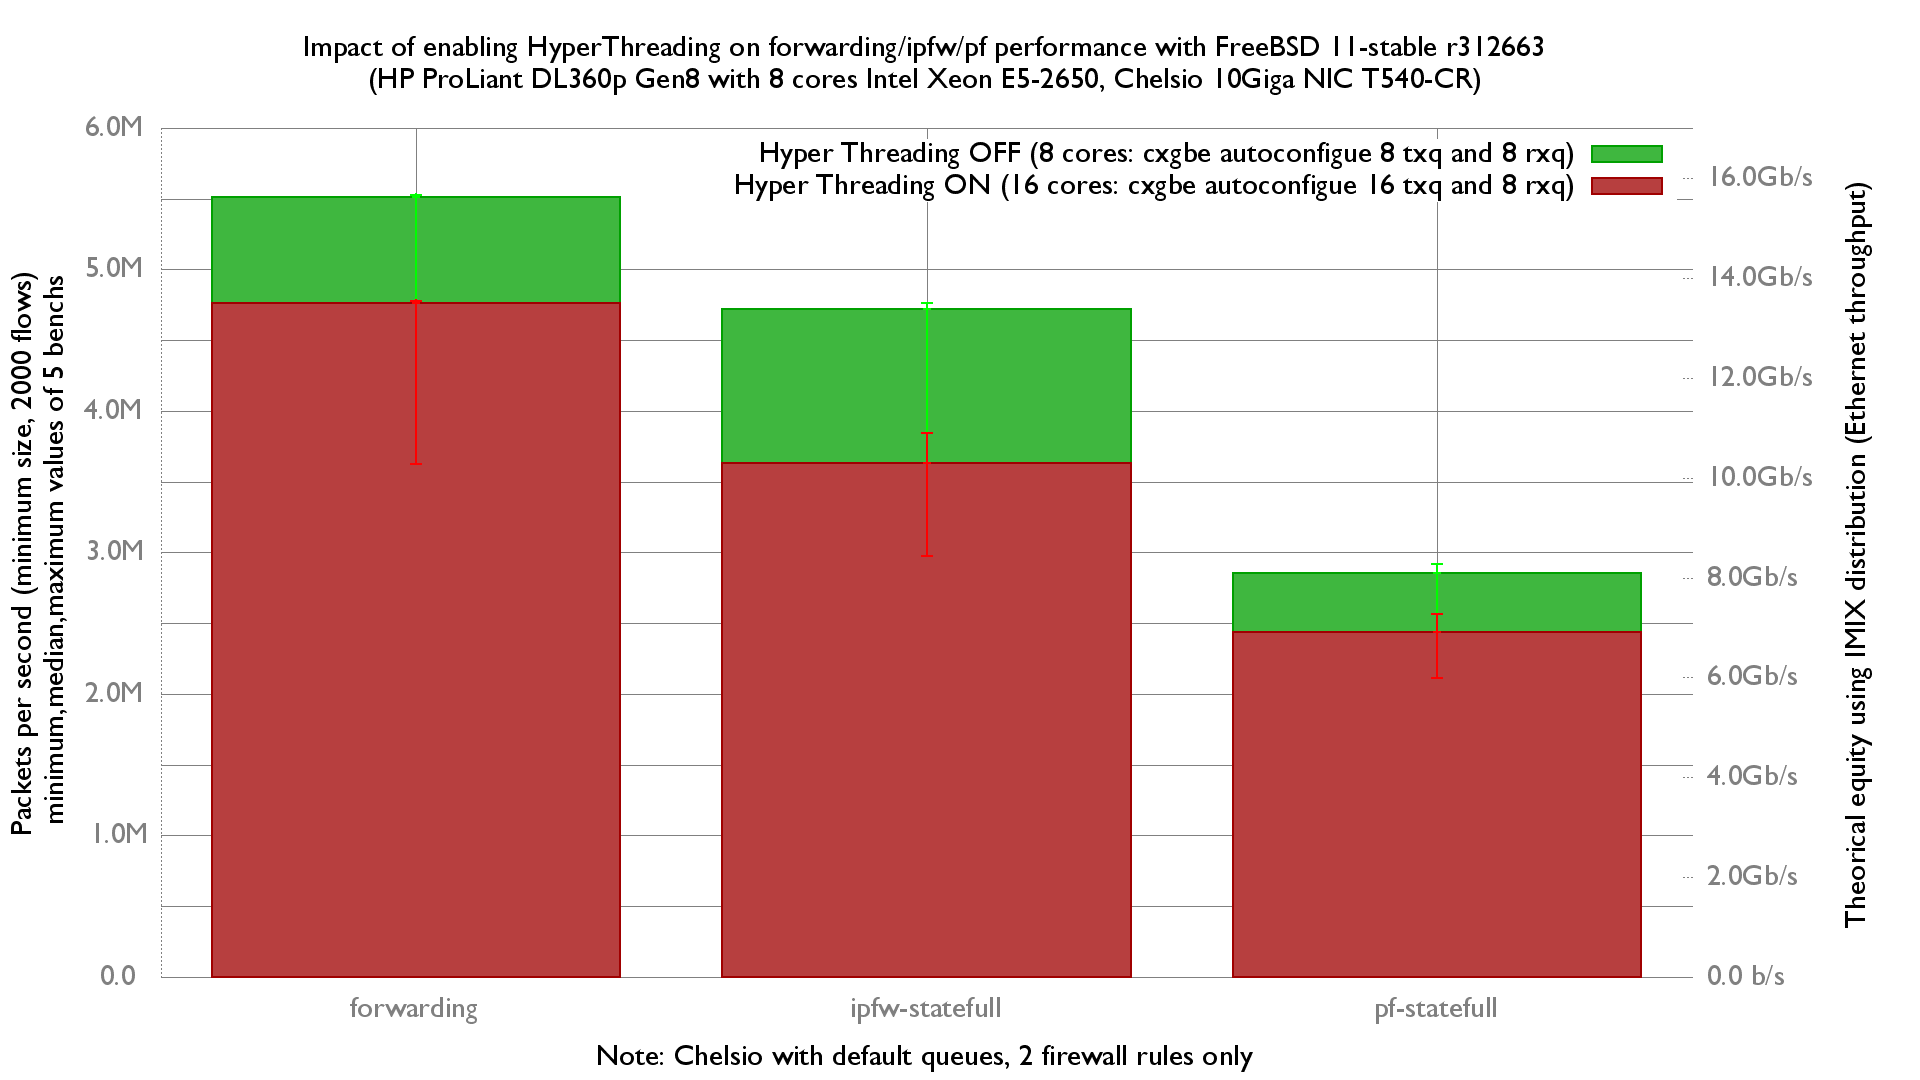 Impact of HyperThreading on forwarding performance on FreeBSD